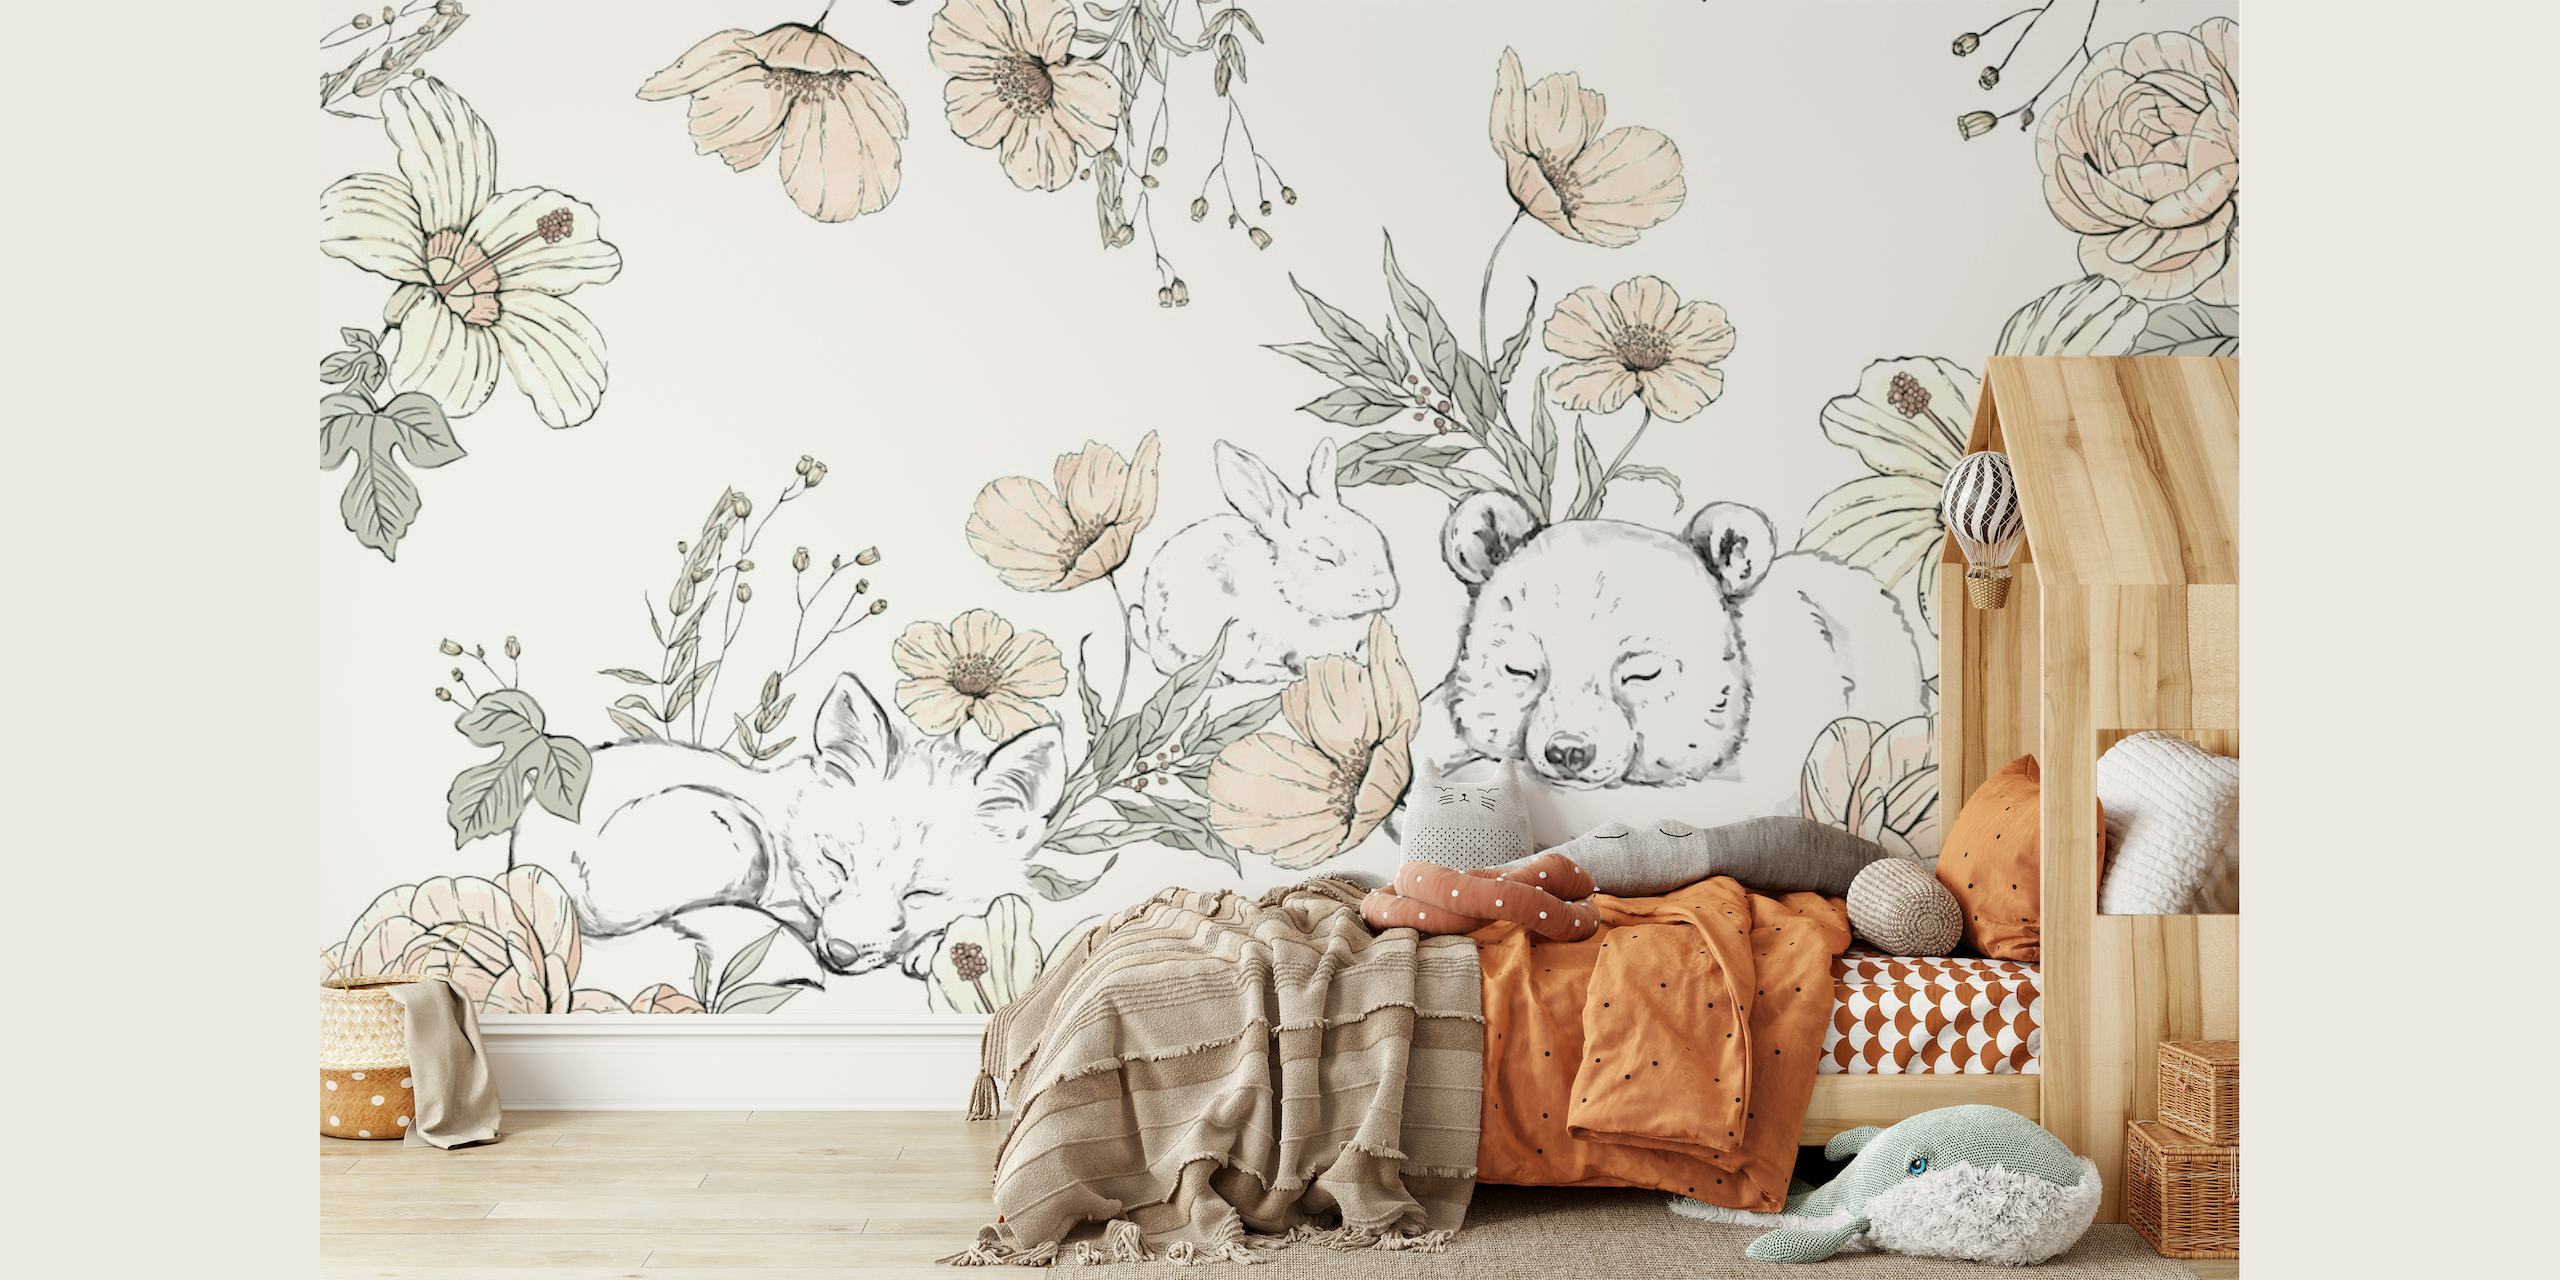 Sleeping Woodland wallpaper